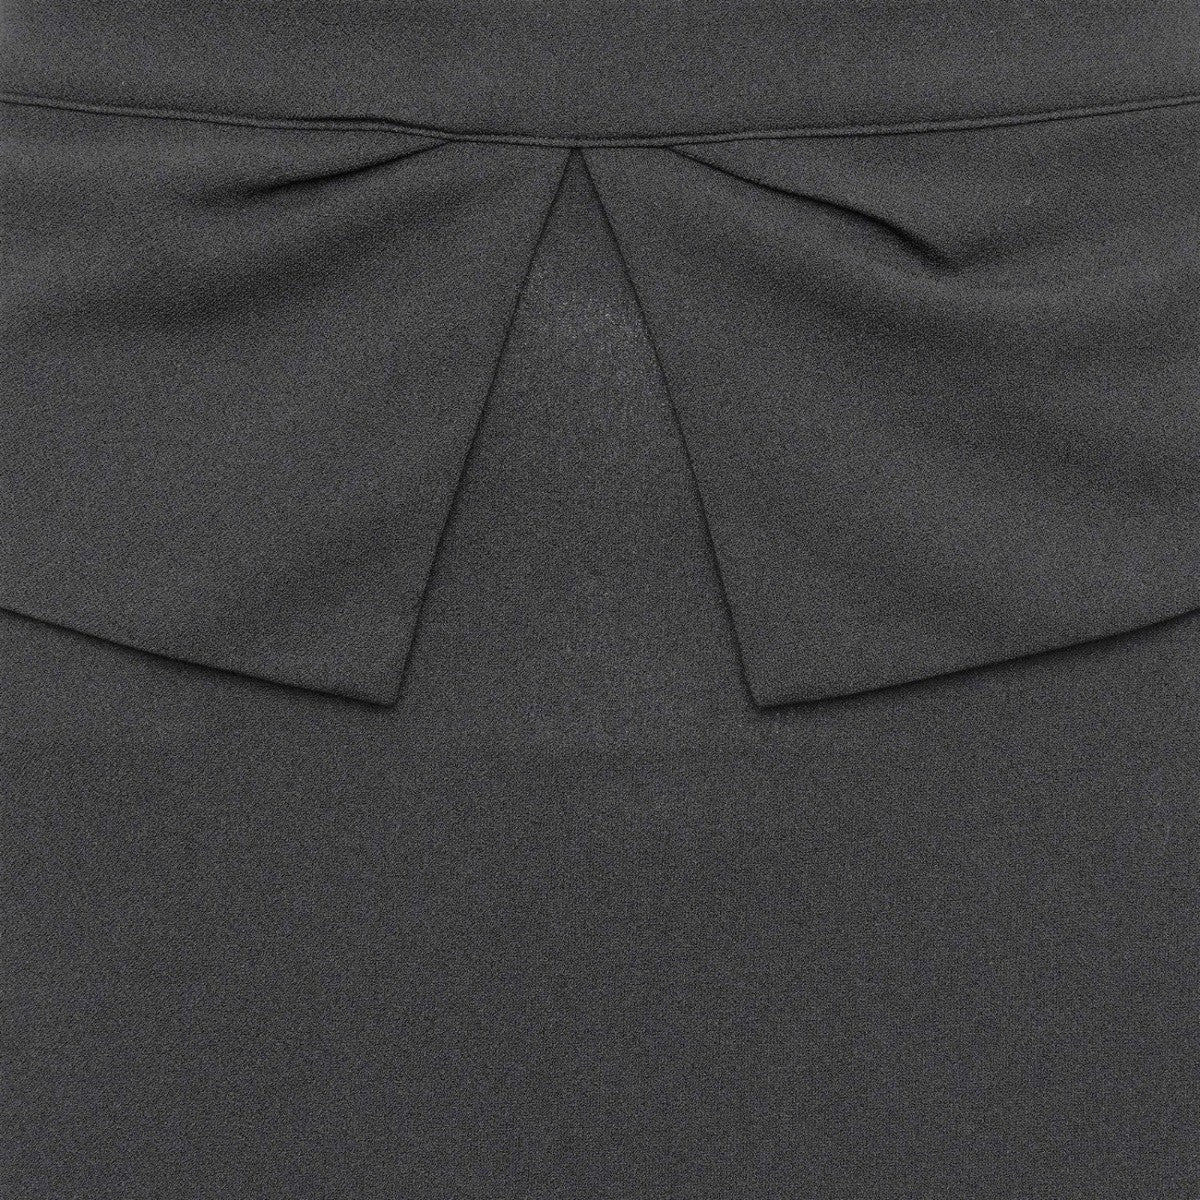 Ro Rox Joan 1950's Retro Vintage Style Pencil Skirt, Black